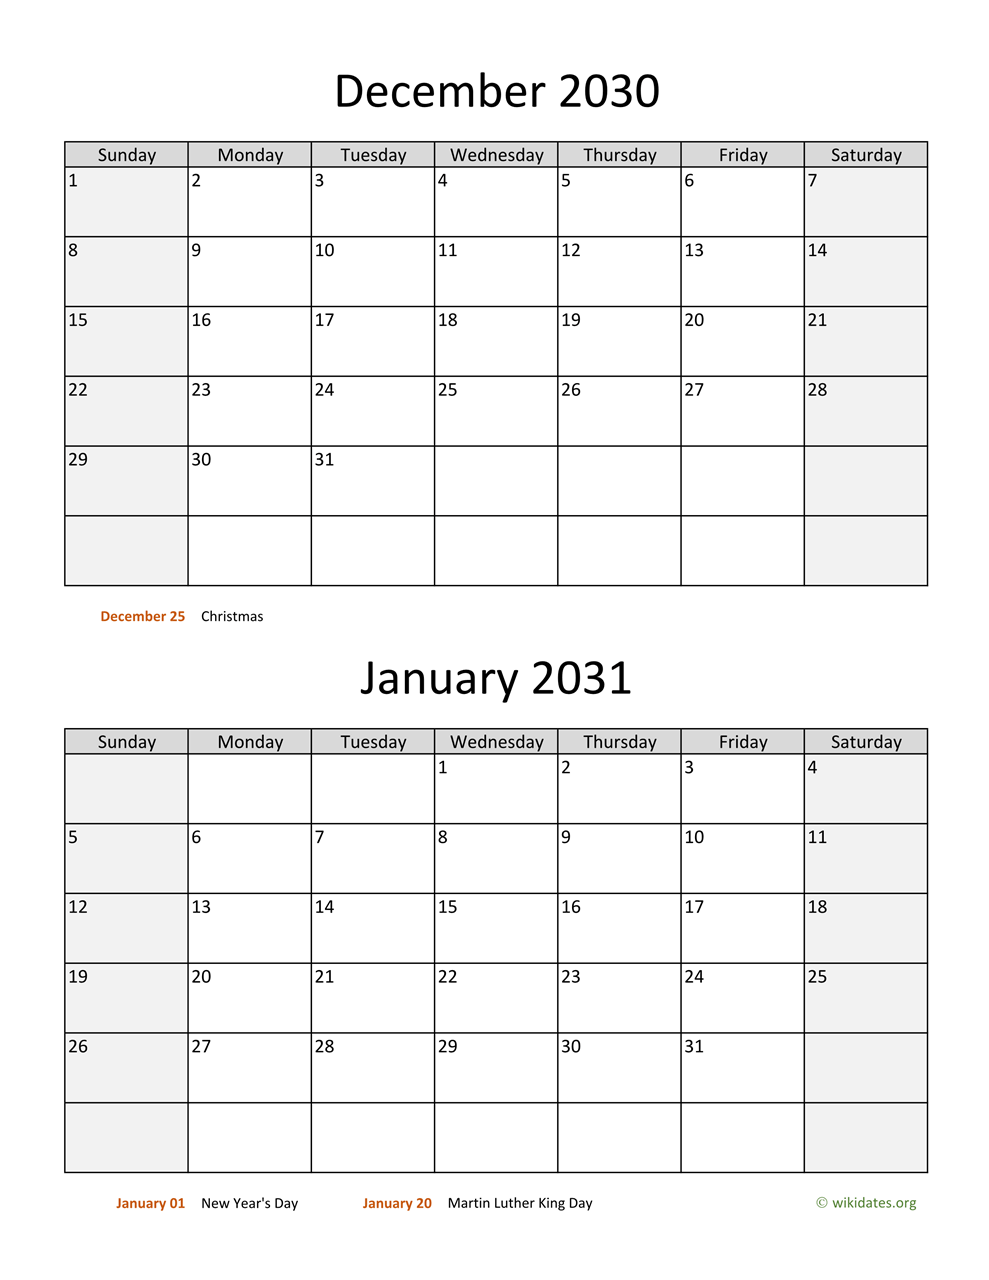 december-2030-and-january-2031-calendar-wikidates